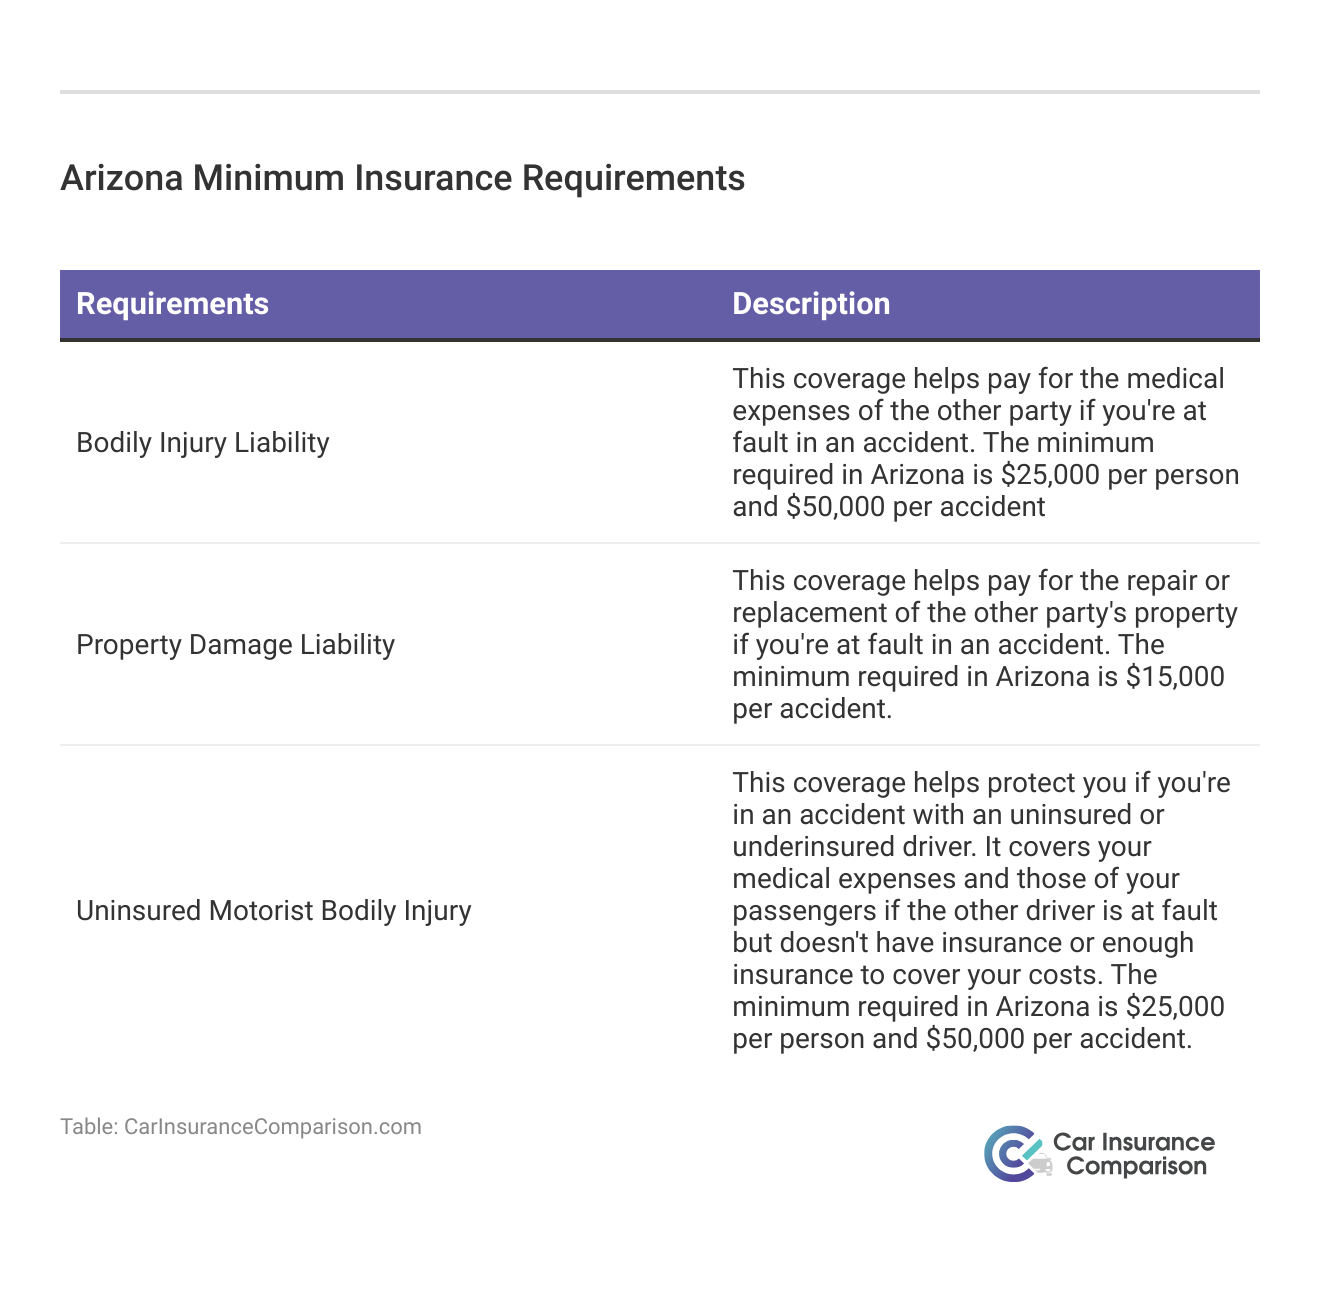 <h3>Arizona Minimum Insurance Requirements</h3>